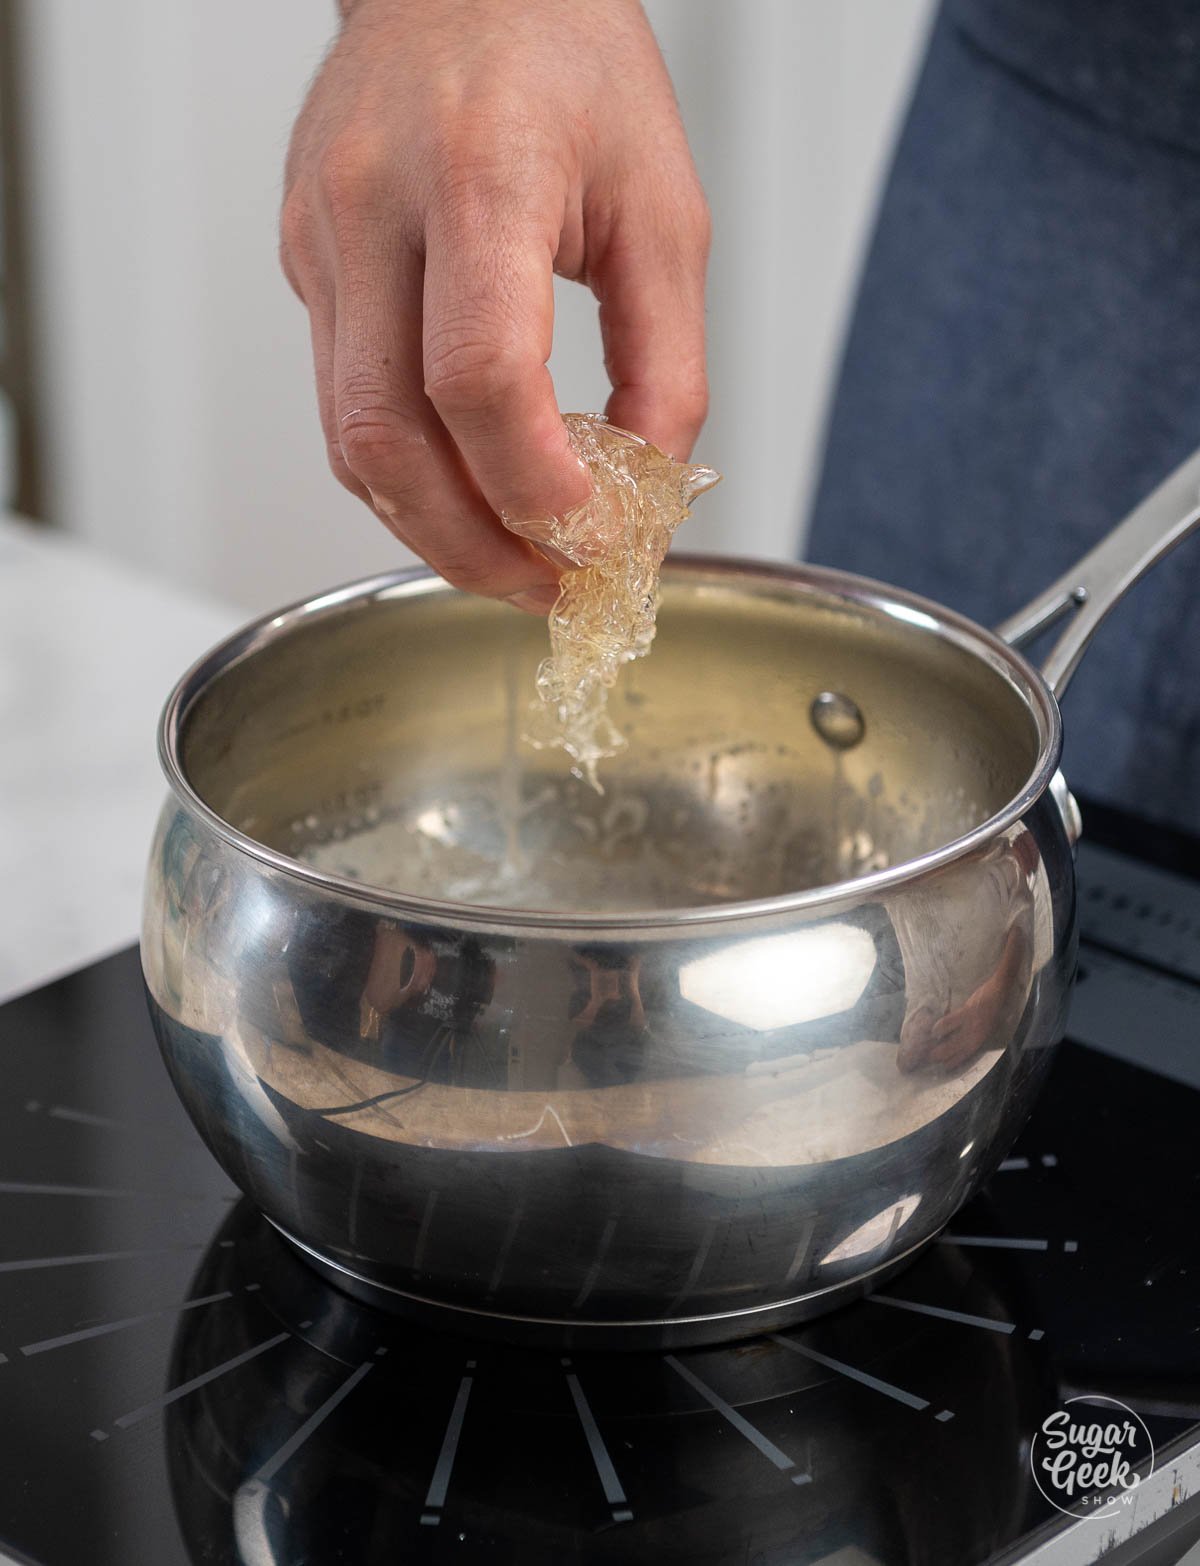 hand dropping gelatin inside of a saucepan